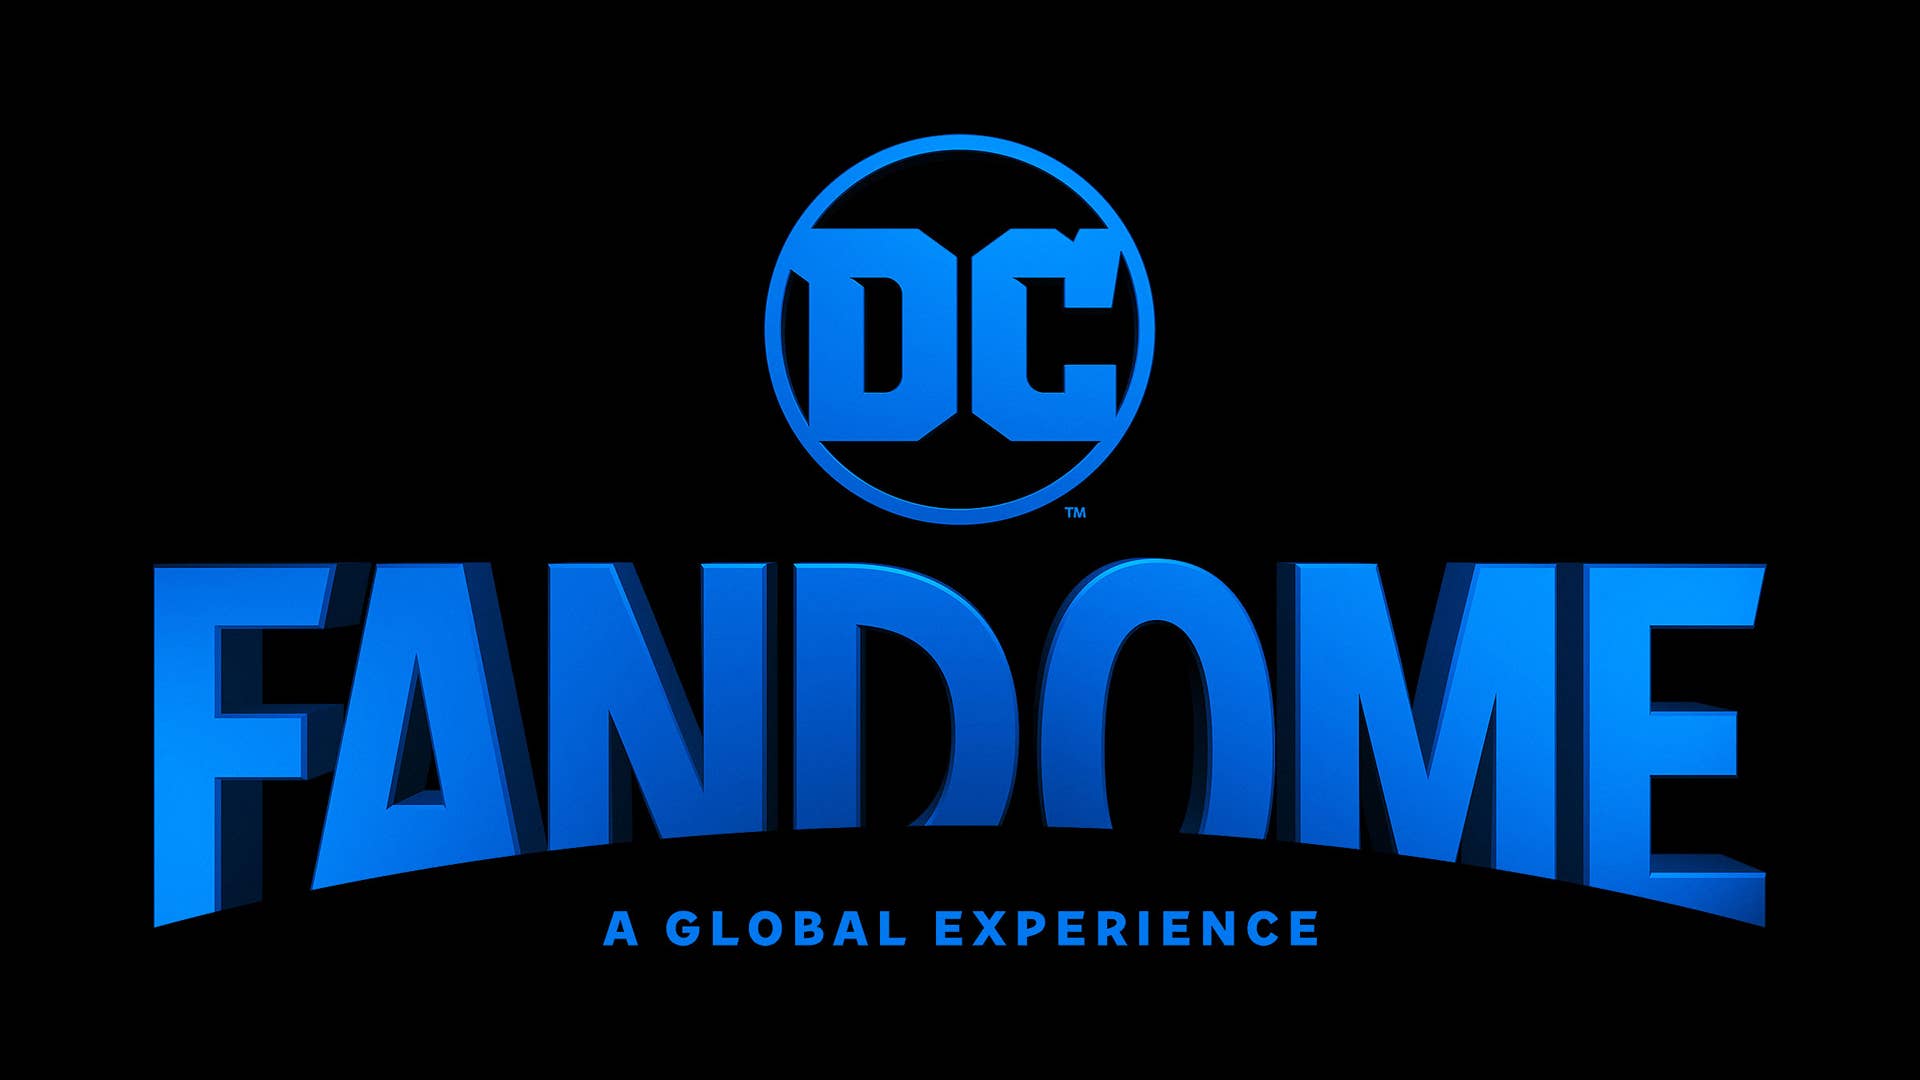 DC FanDome logo